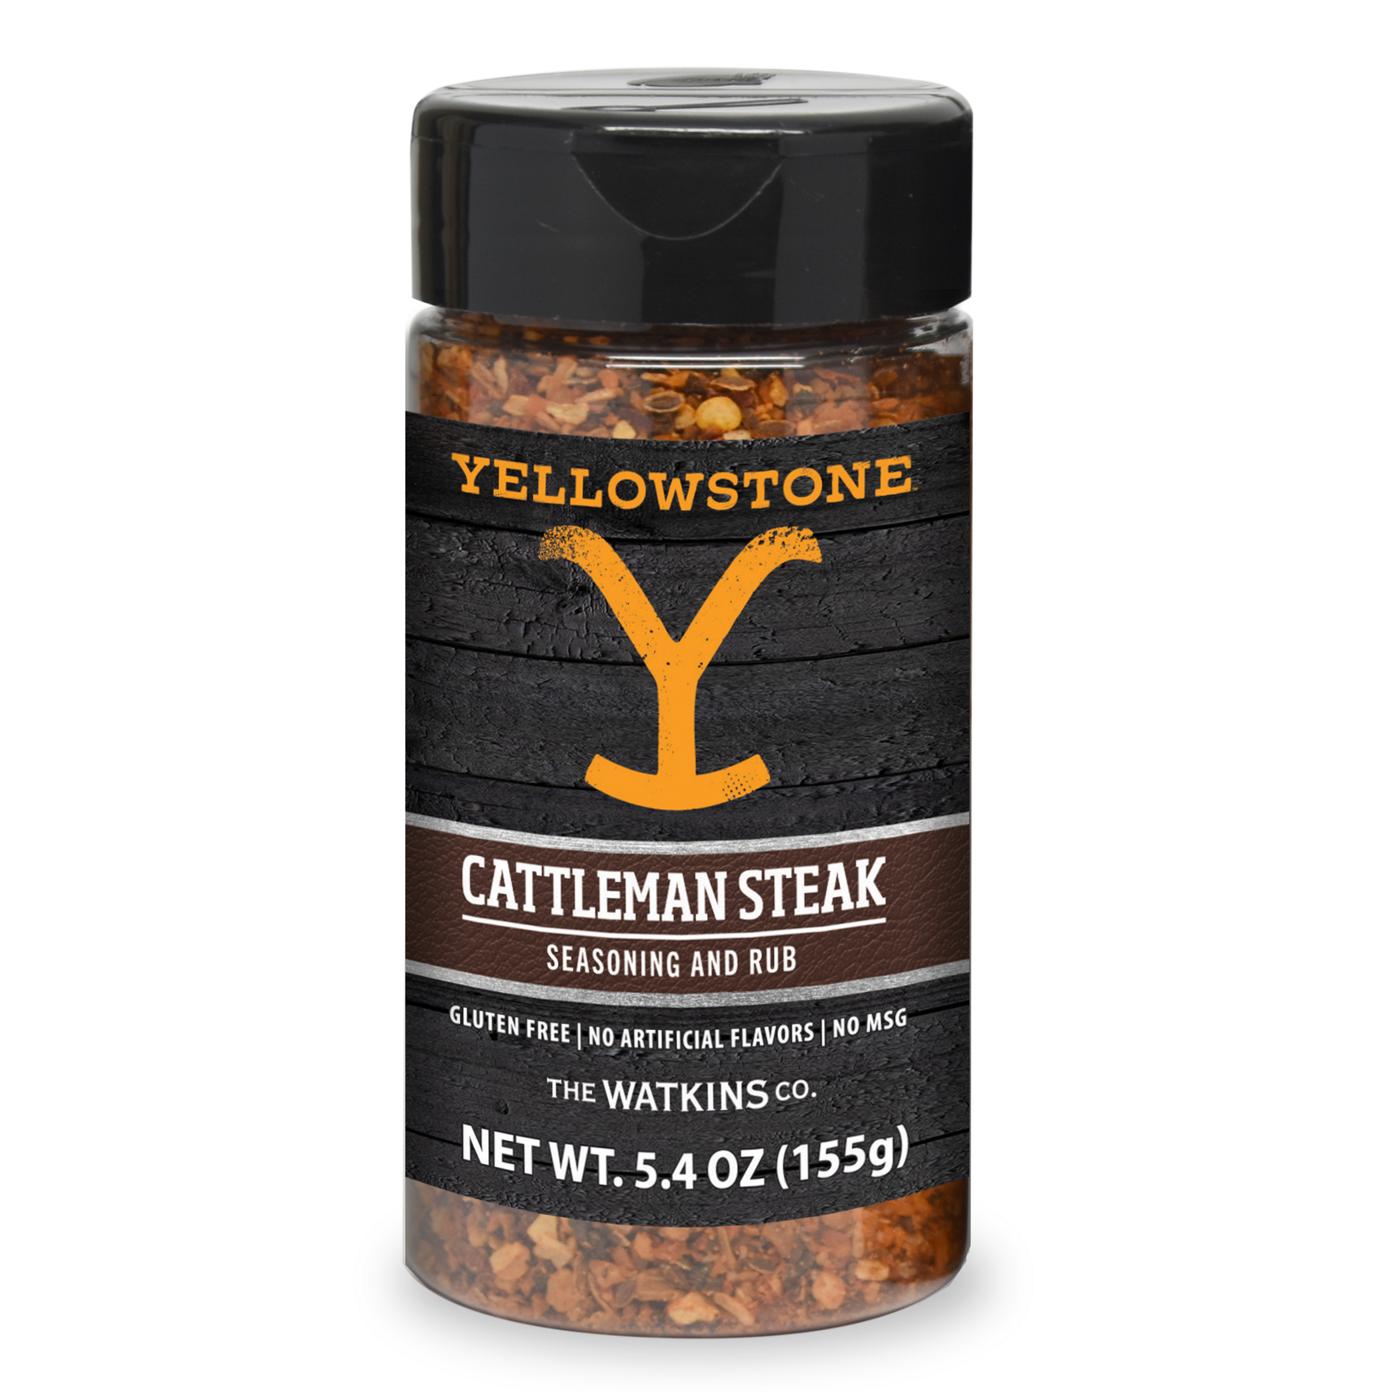 Yellowstone Cattleman Steak Rub; image 1 of 2